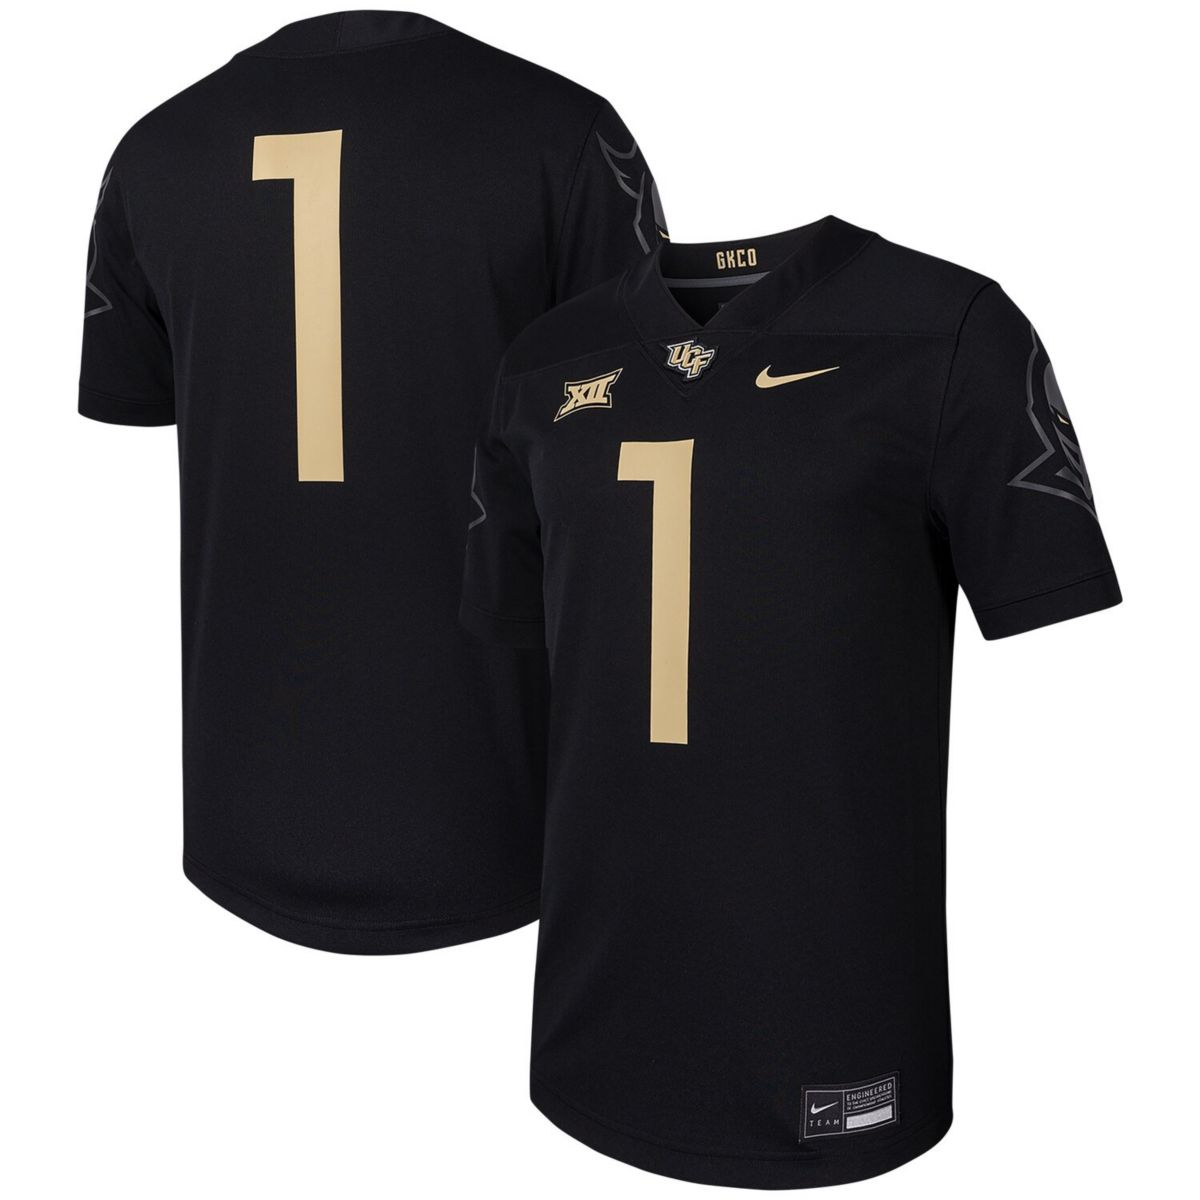 Men's Nike #1 Black UCF Knights Untouchable Football Replica Jersey Nike